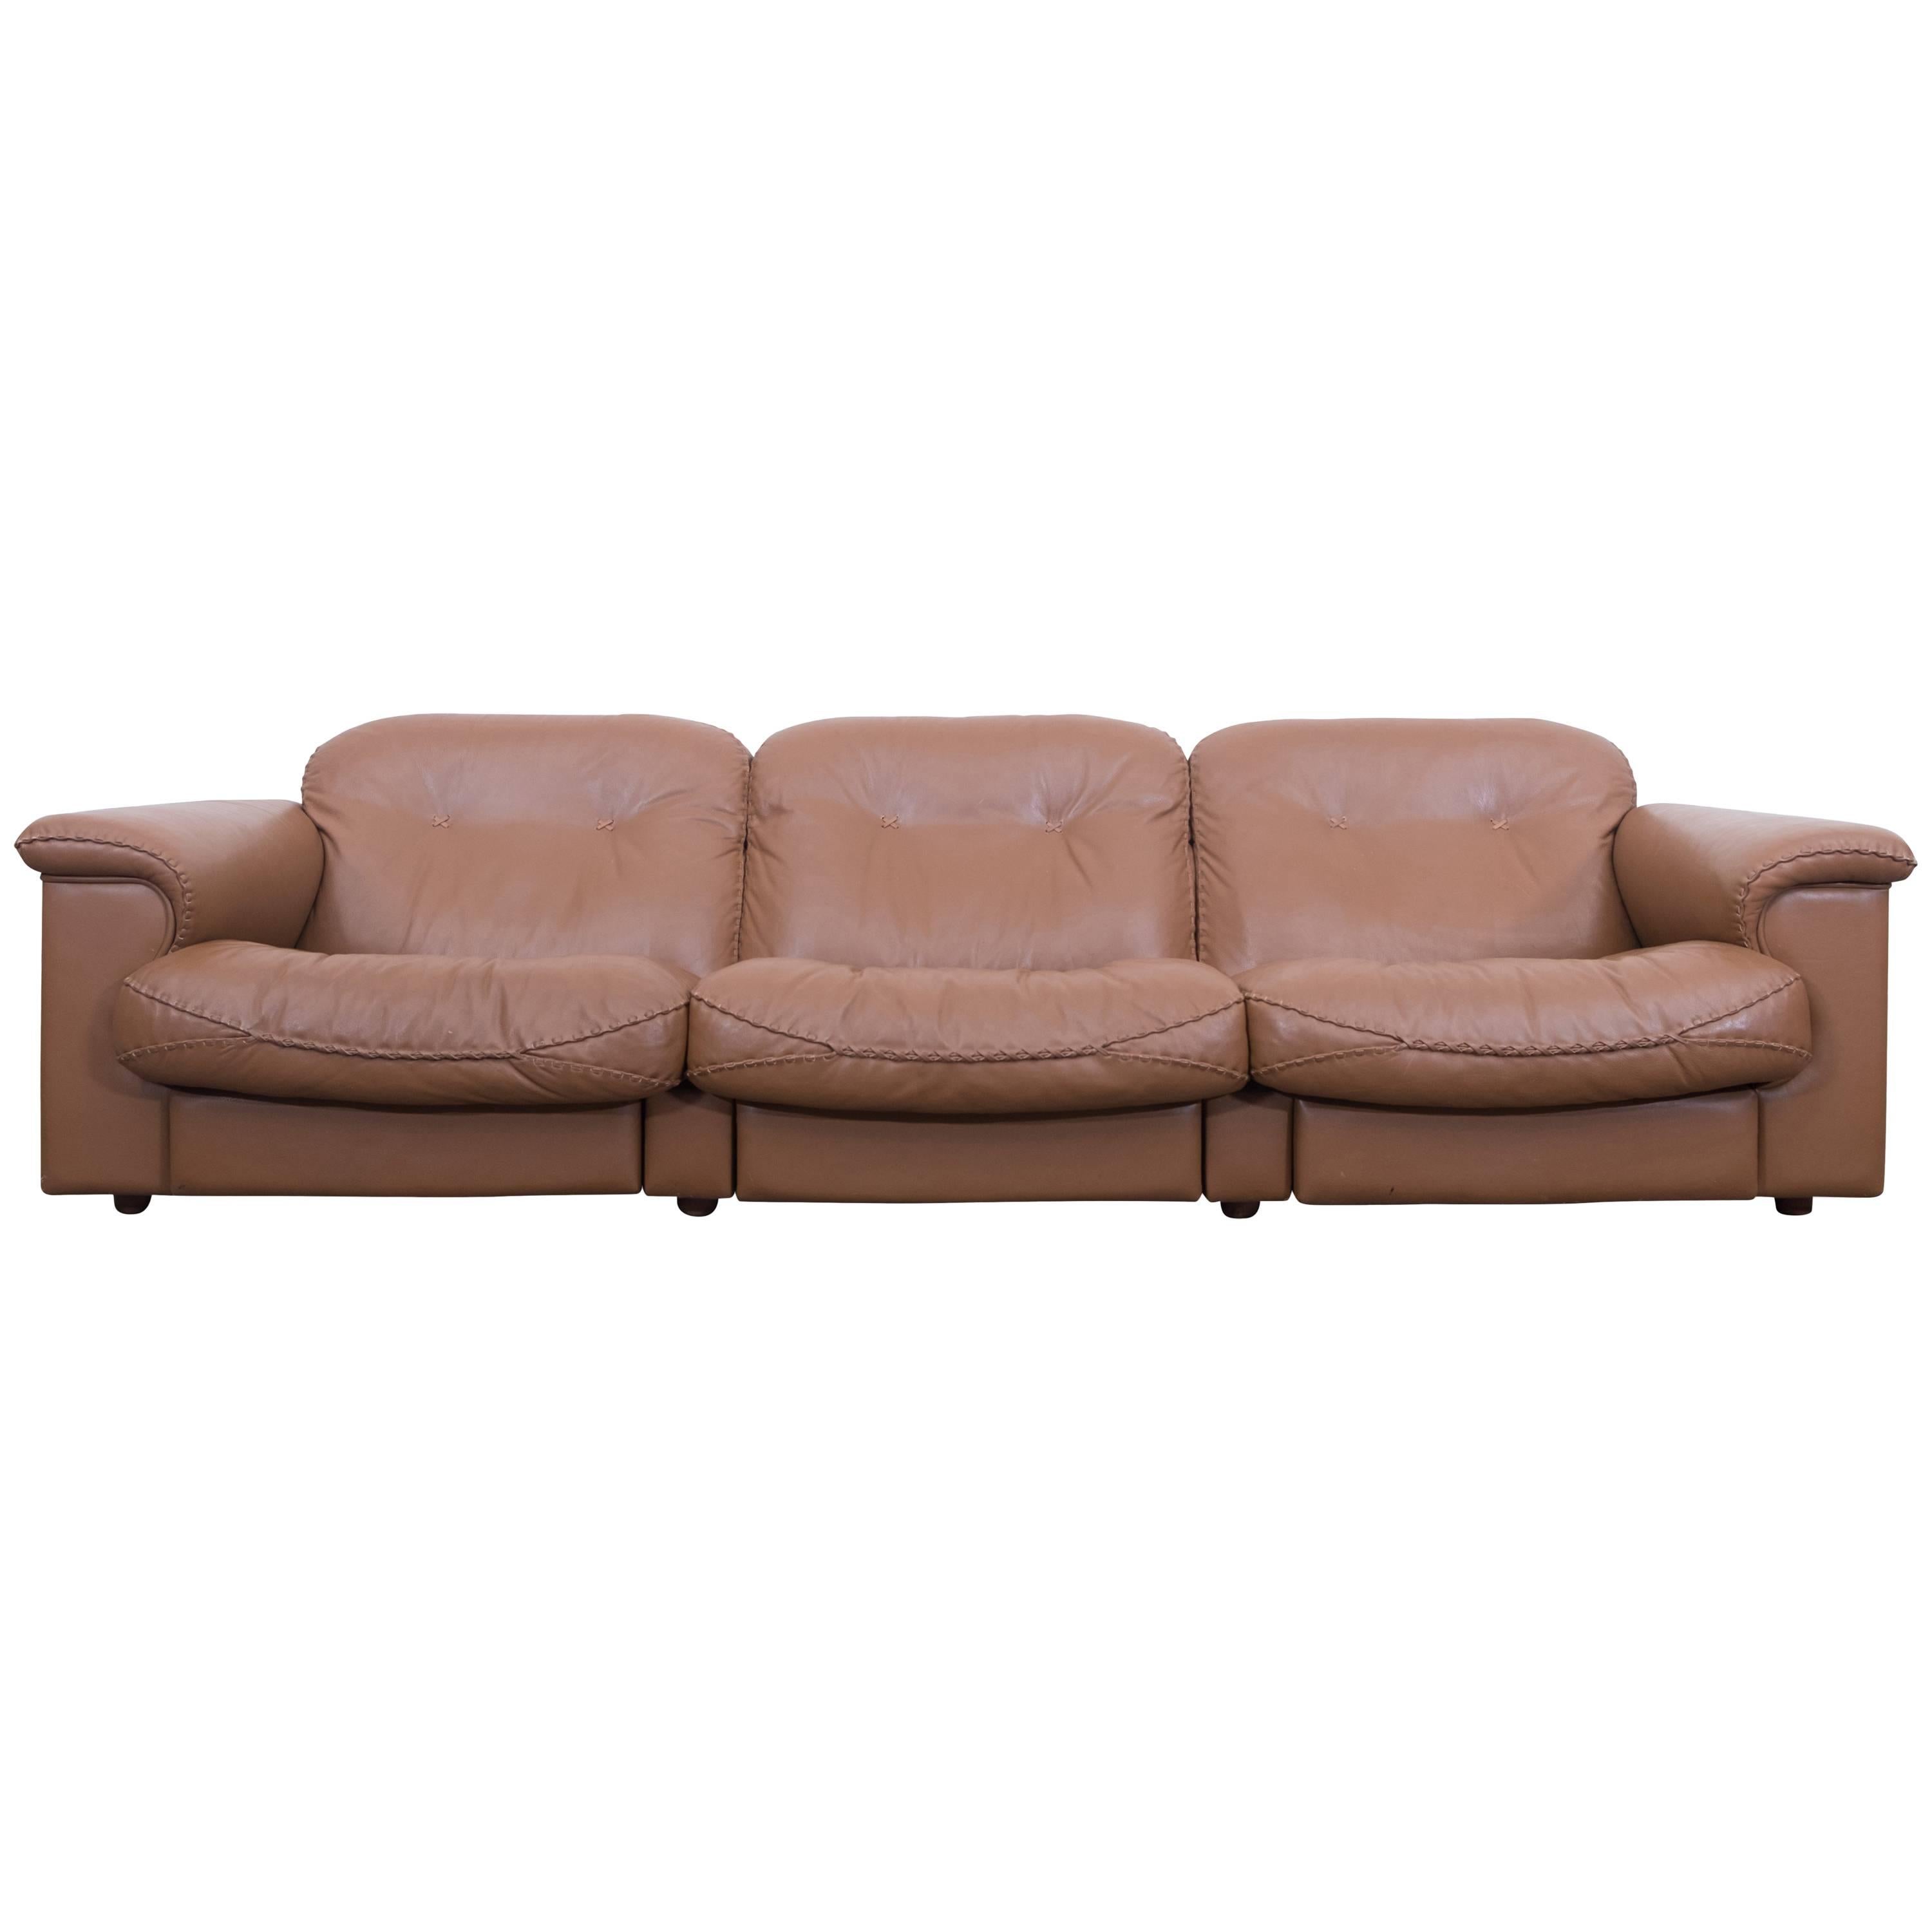 Cognac leather De Sede Mid-Century modern Adjustable DS 101 Sofa Set